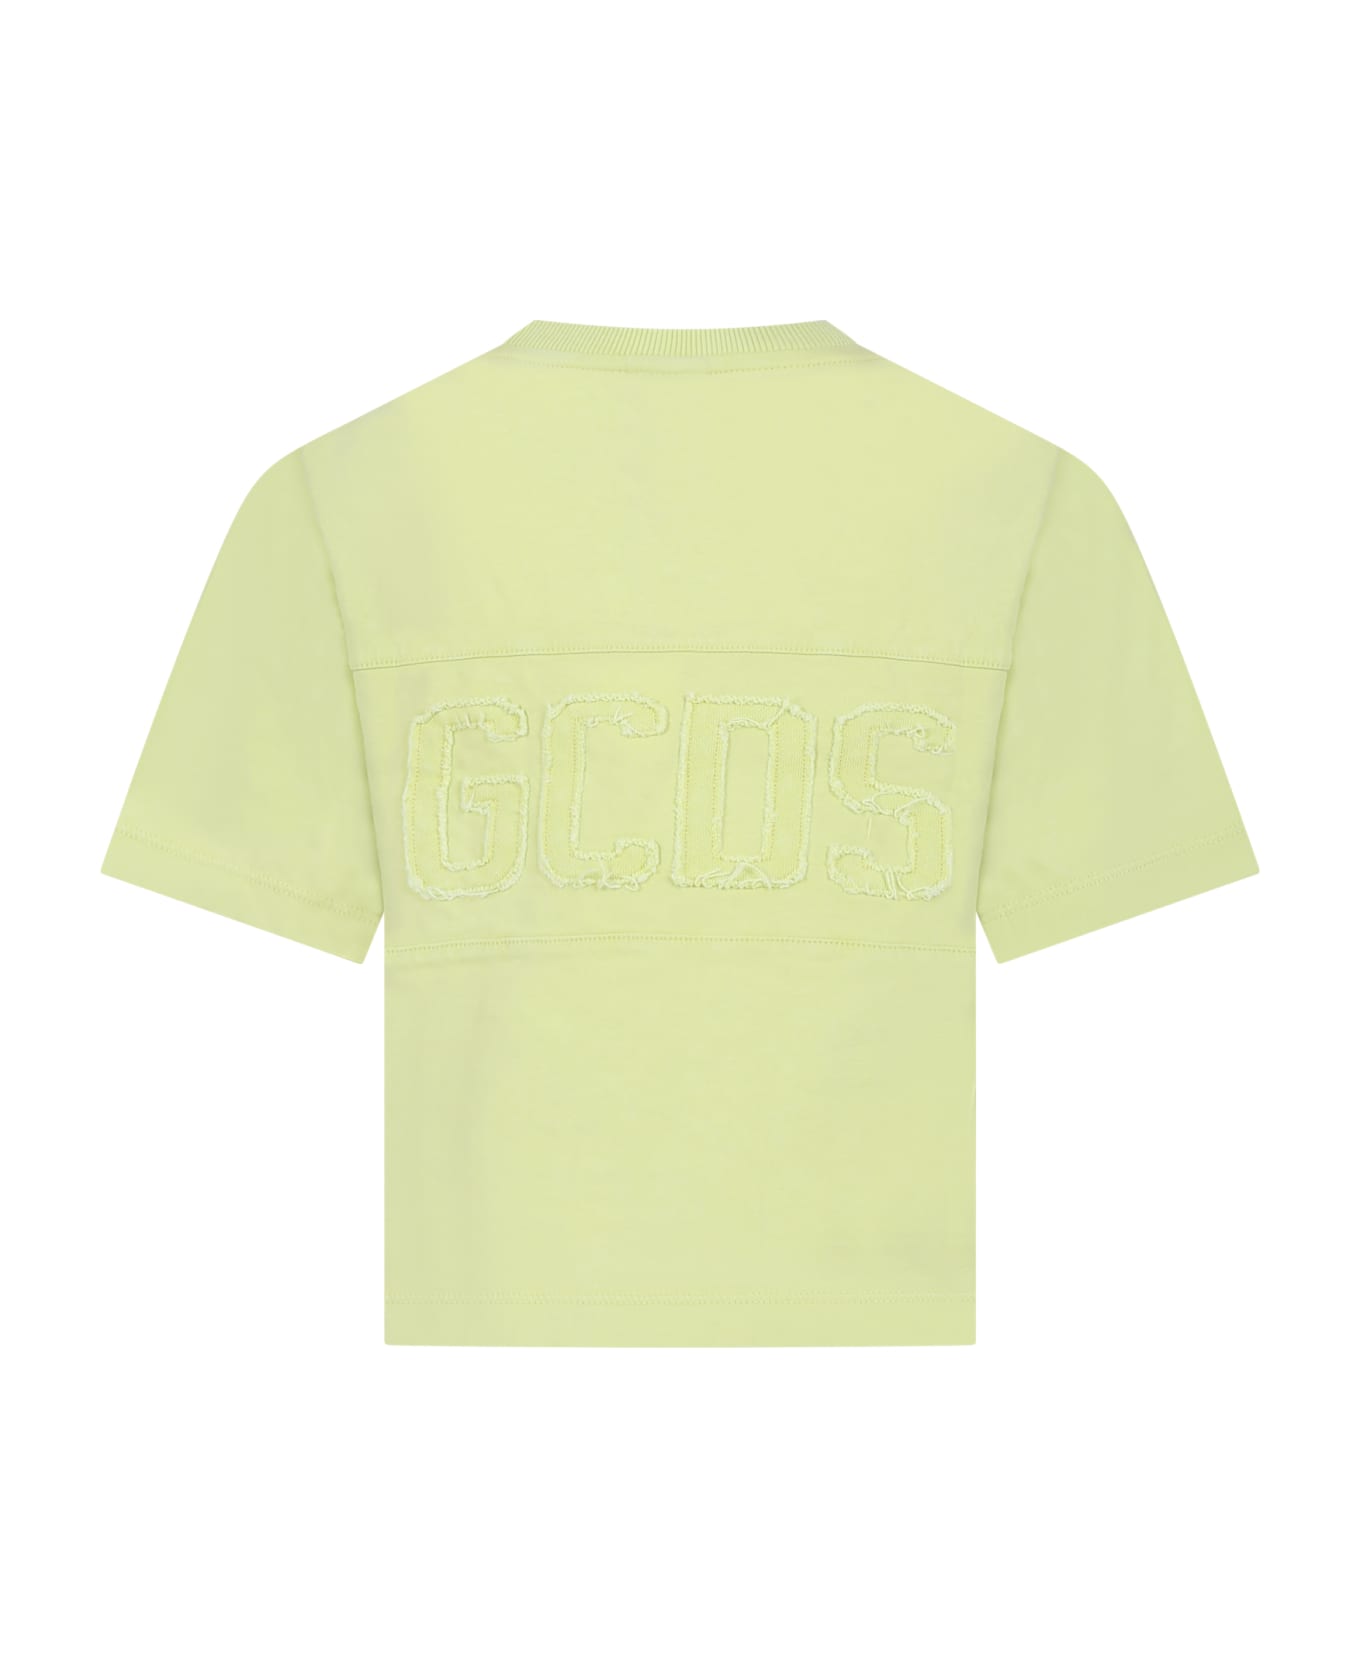 GCDS Mini Yellow T-shirt For Kids With 44-5 - Yellow